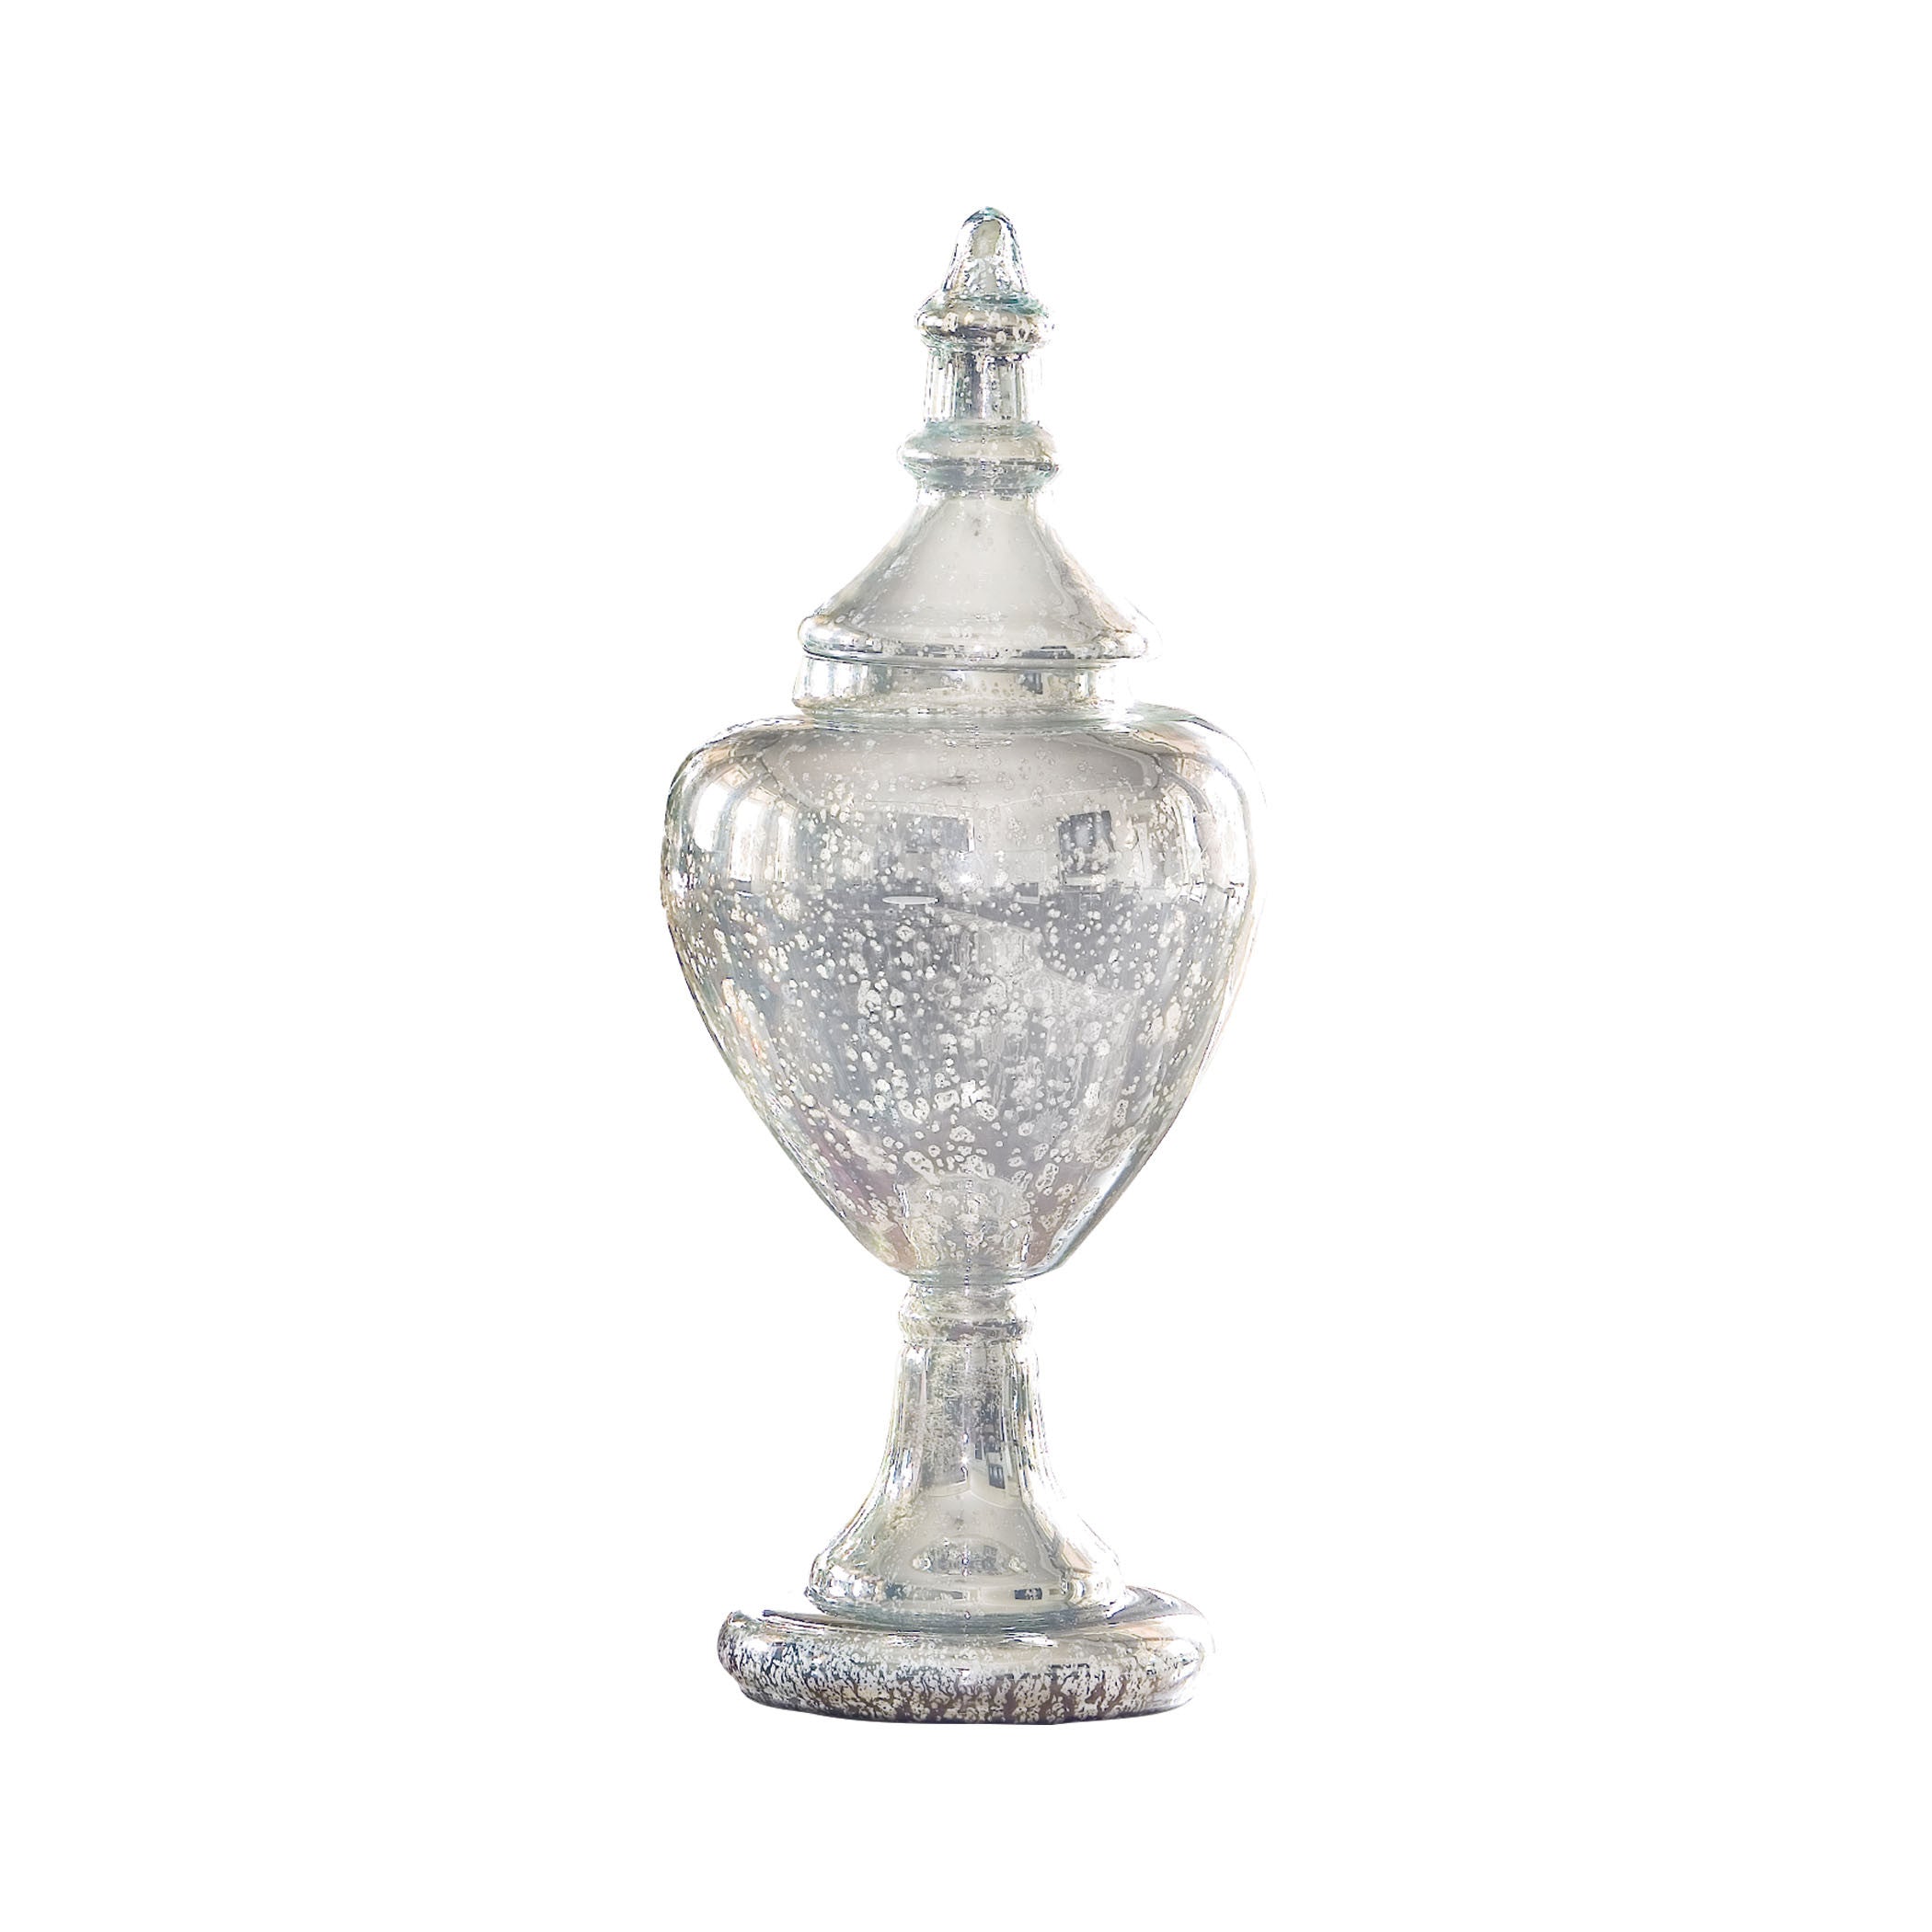 Pomeroy Pom-133565 Cassia Collection Antique Silver Finish Jar/bottle